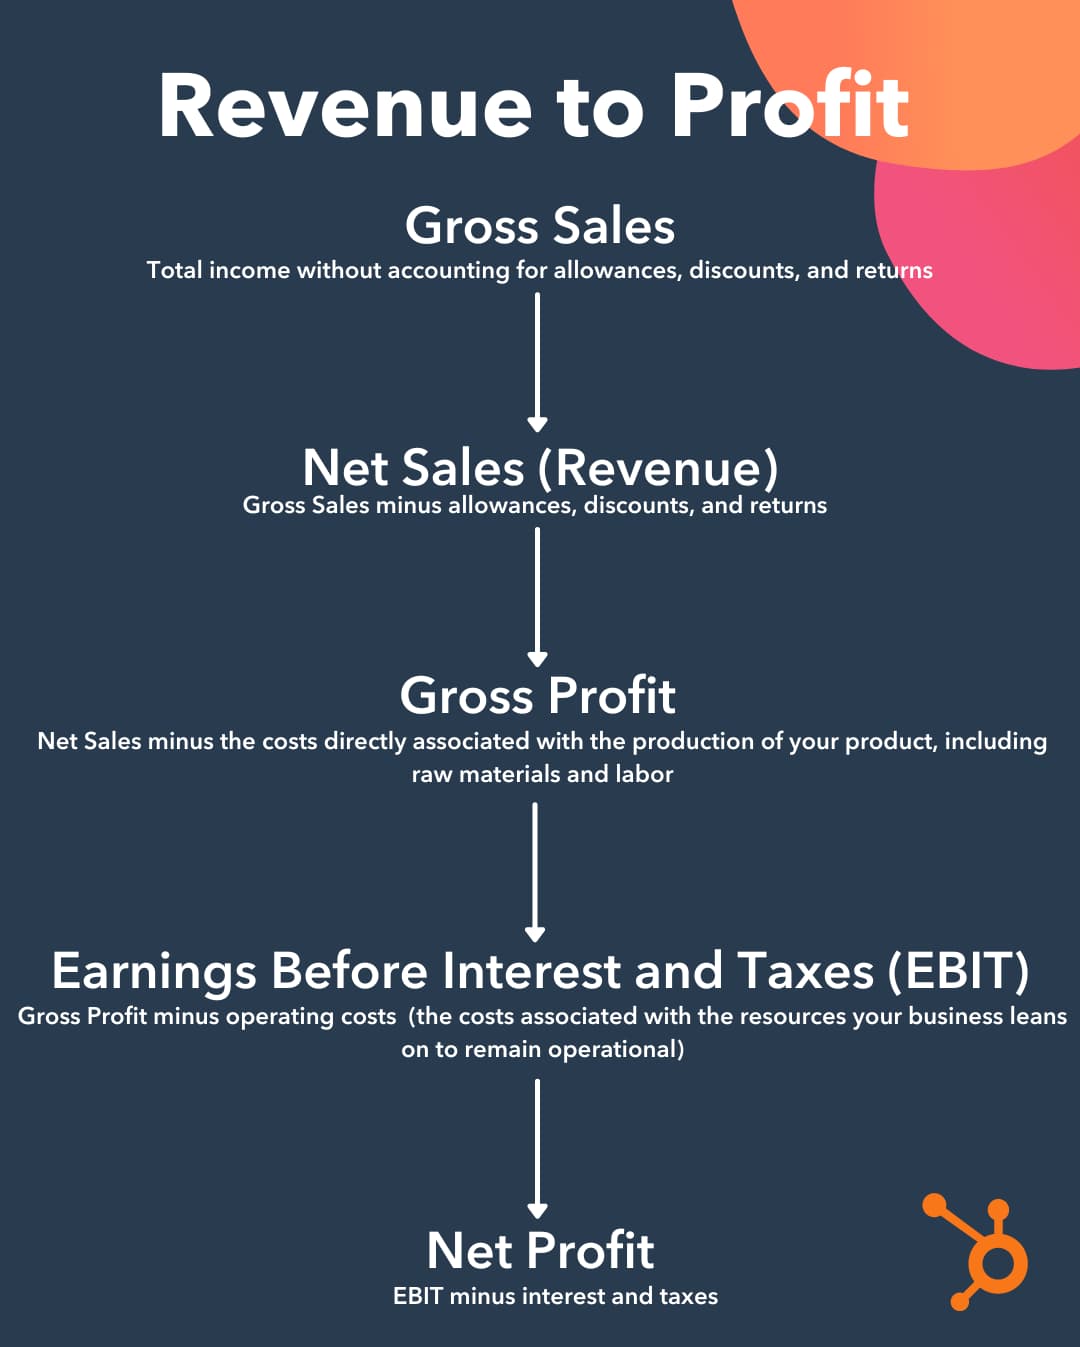 revenue vs profit